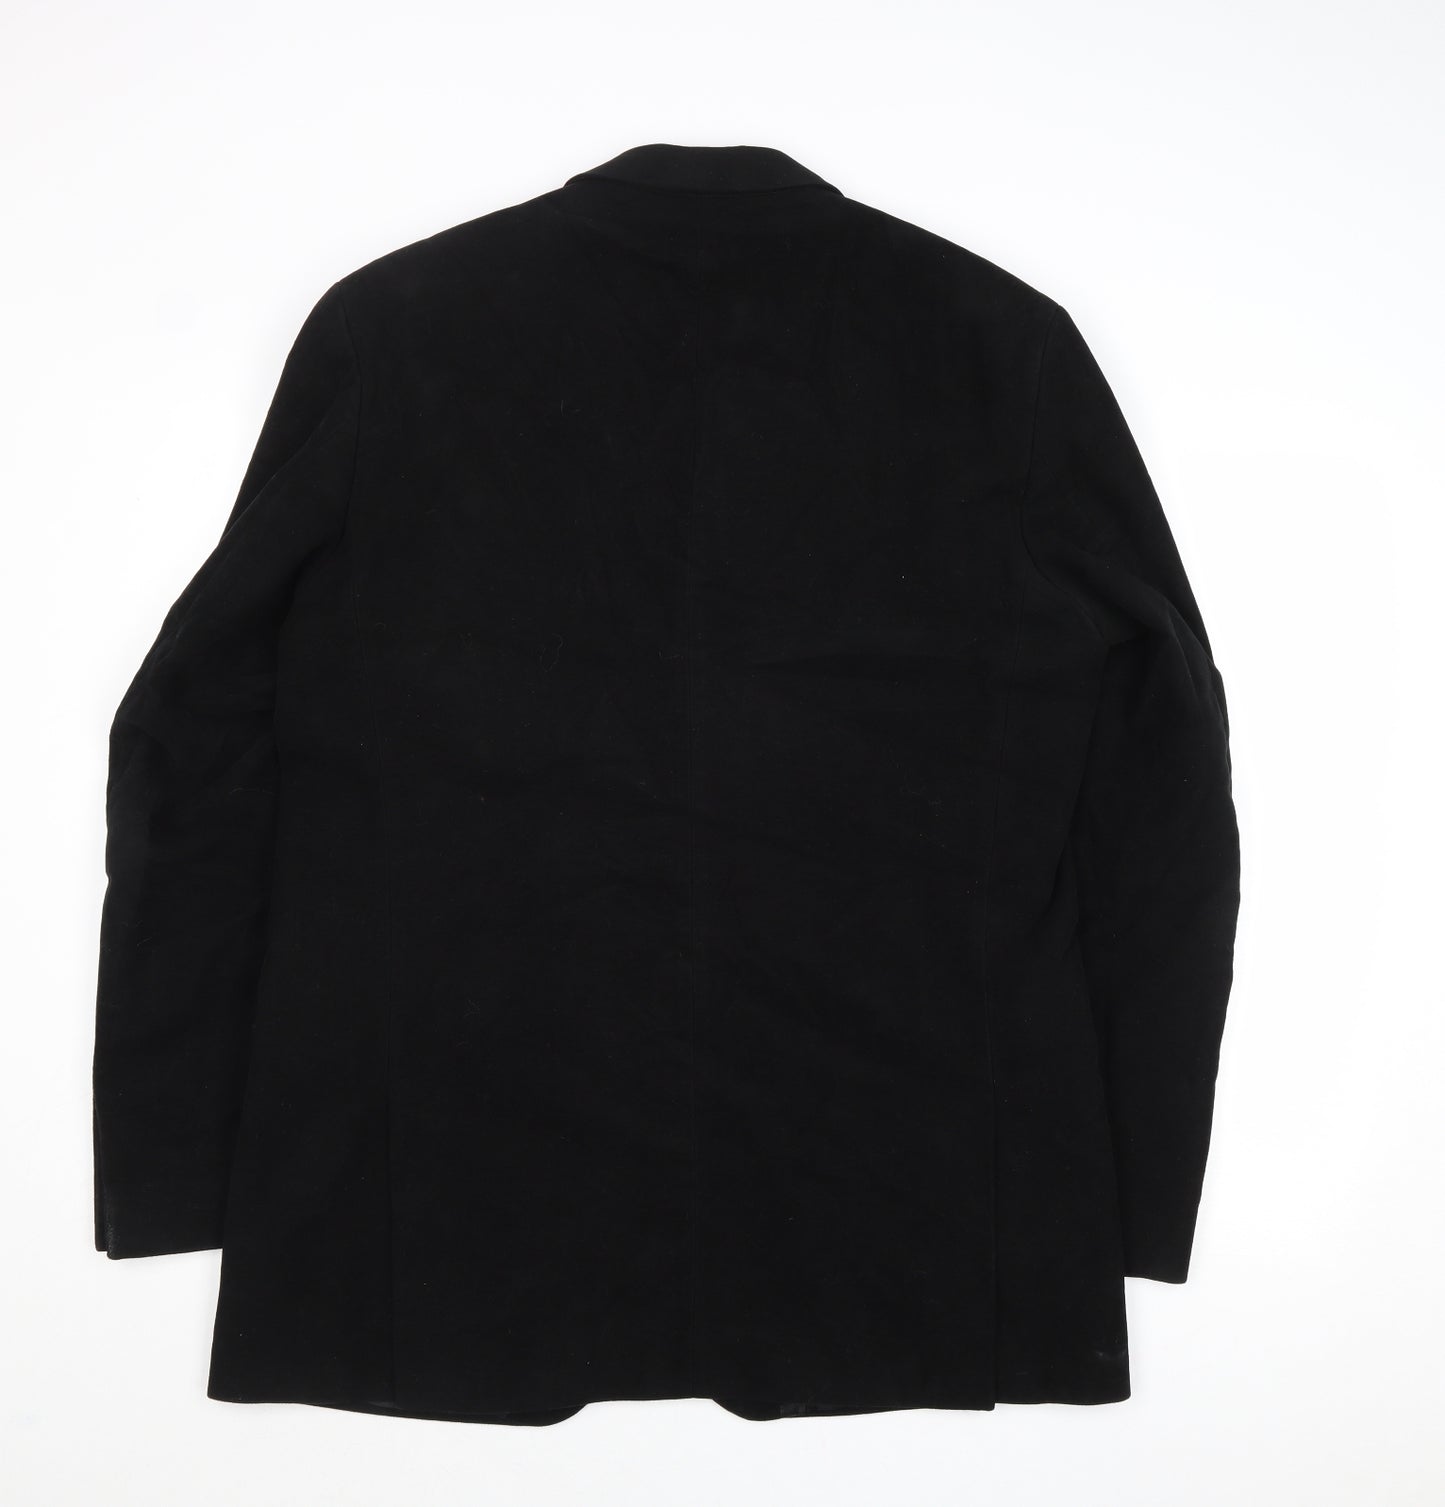 Racing Green Mens Black Cotton Jacket Suit Jacket Size 40 Regular